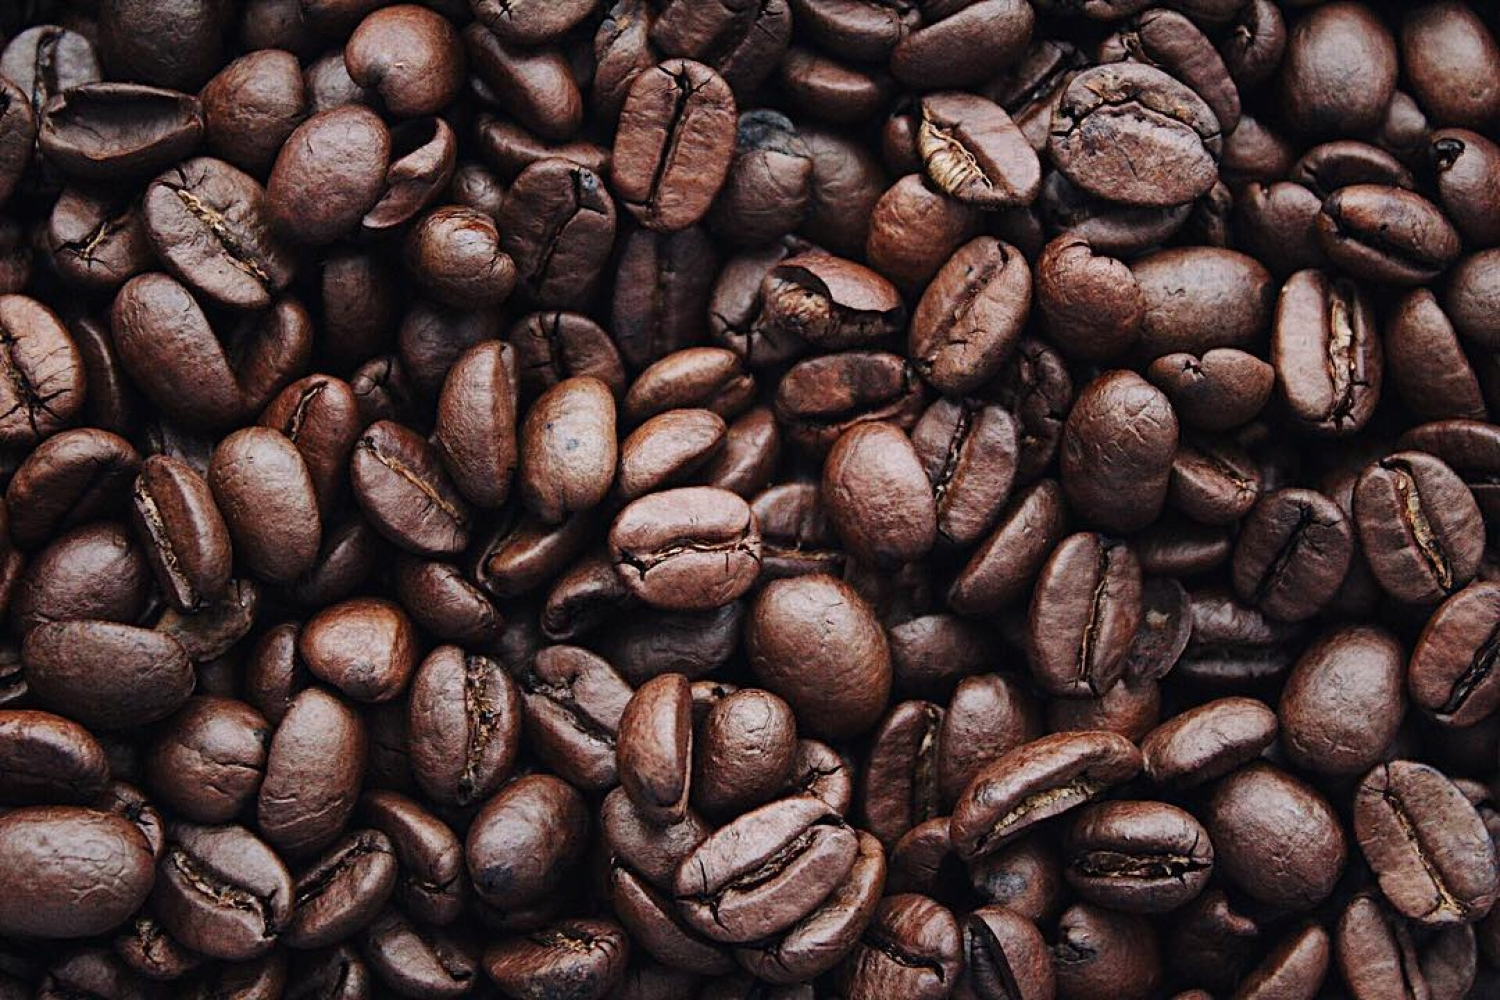 How to sleep instantly? Reduce caffeine intake